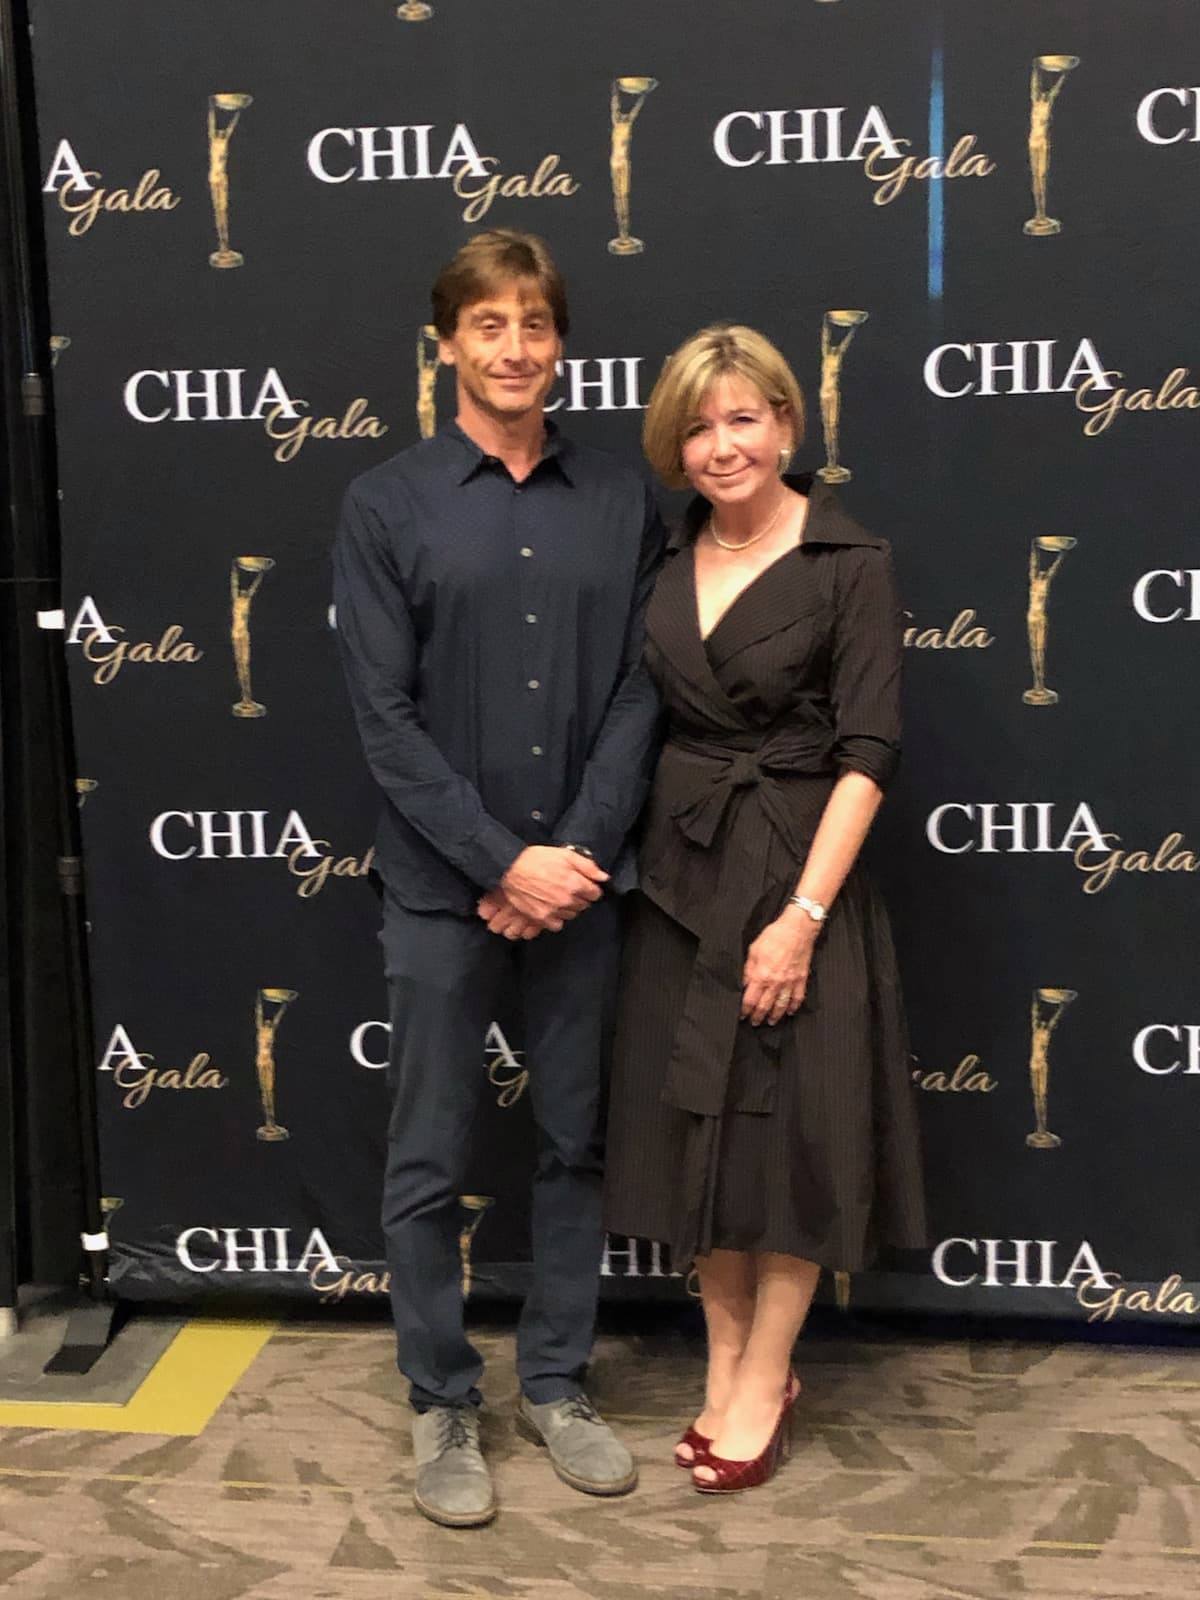 Kevin and Sarah CHIA Gala 2019